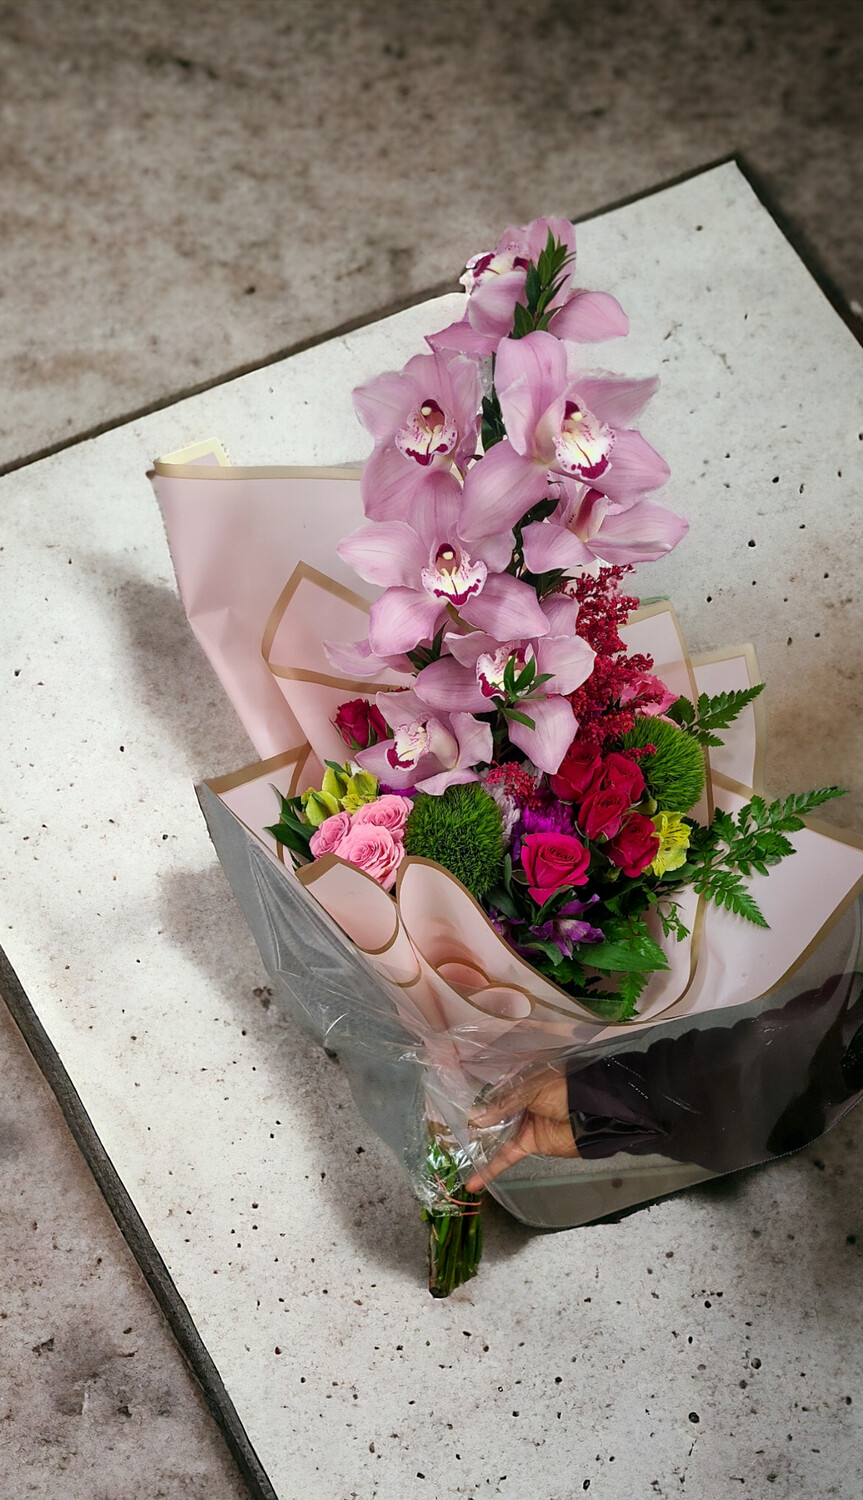 Florist Choice Handheld Bouquet Of Only Premium Flowers